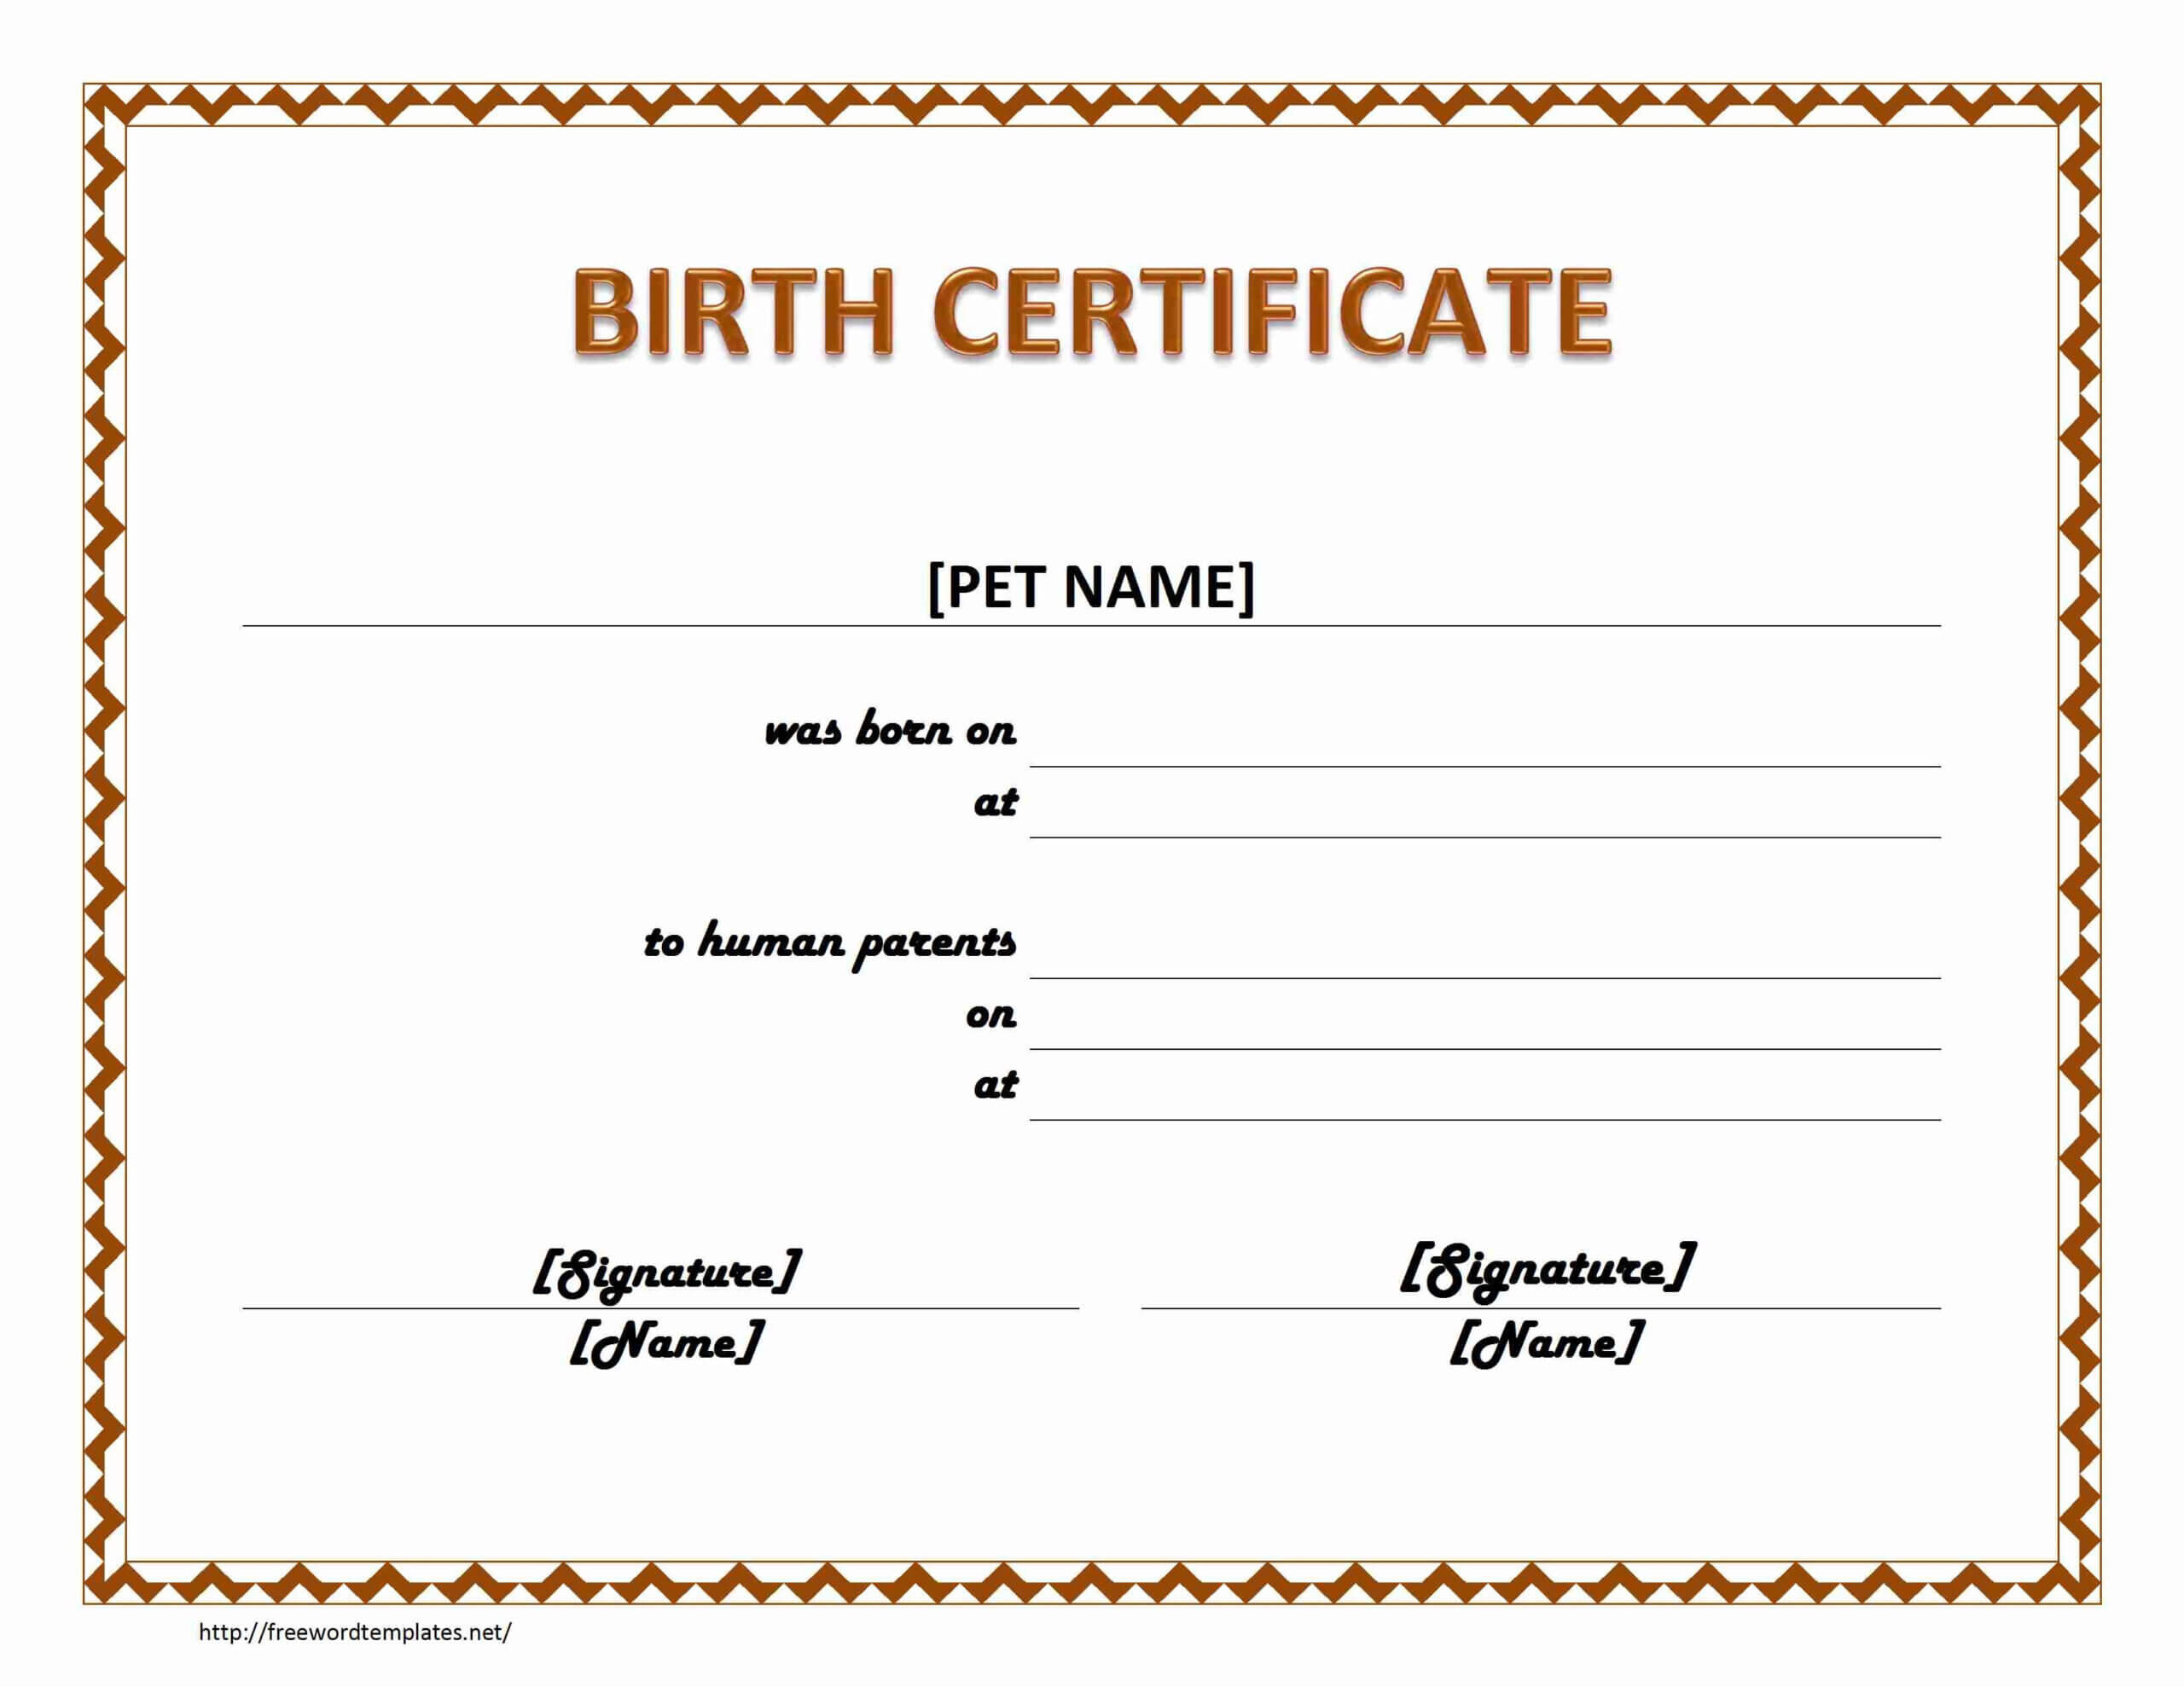 Pet Birth Certificate Maker | Pet Birth Certificate For Word Intended For Birth Certificate Template For Microsoft Word